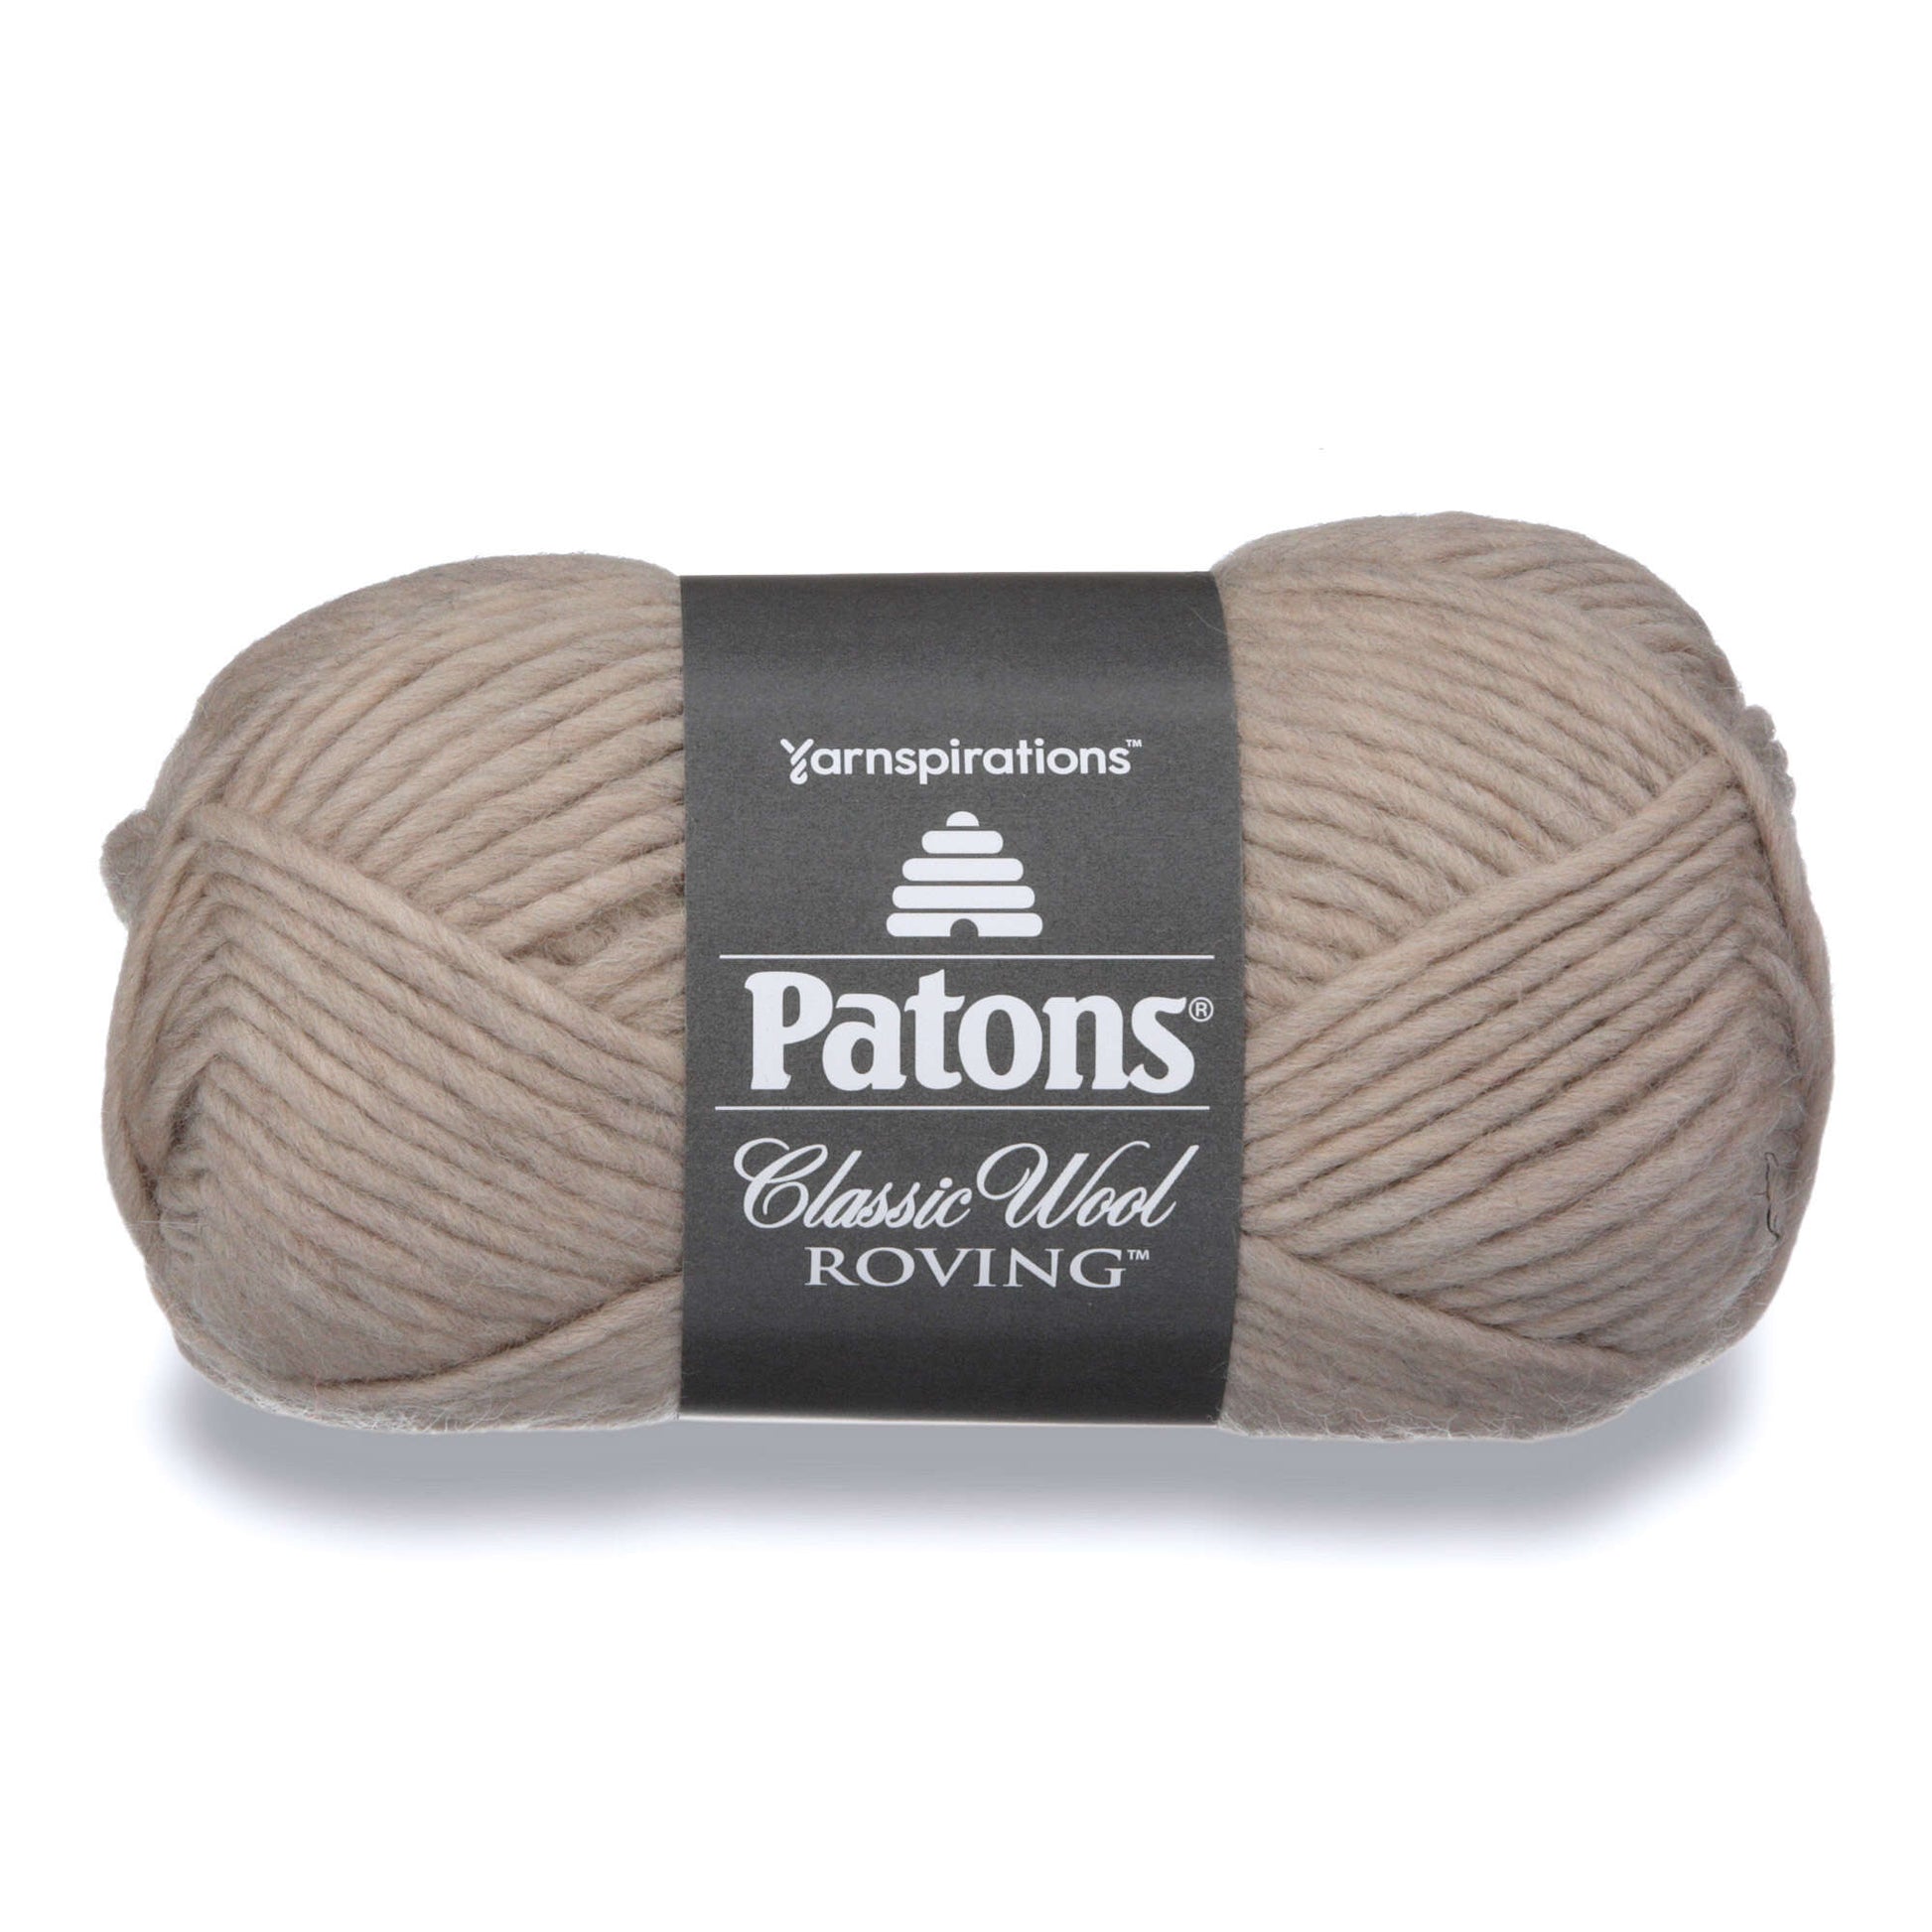 Patons Classic Wool Roving Yarn Natural